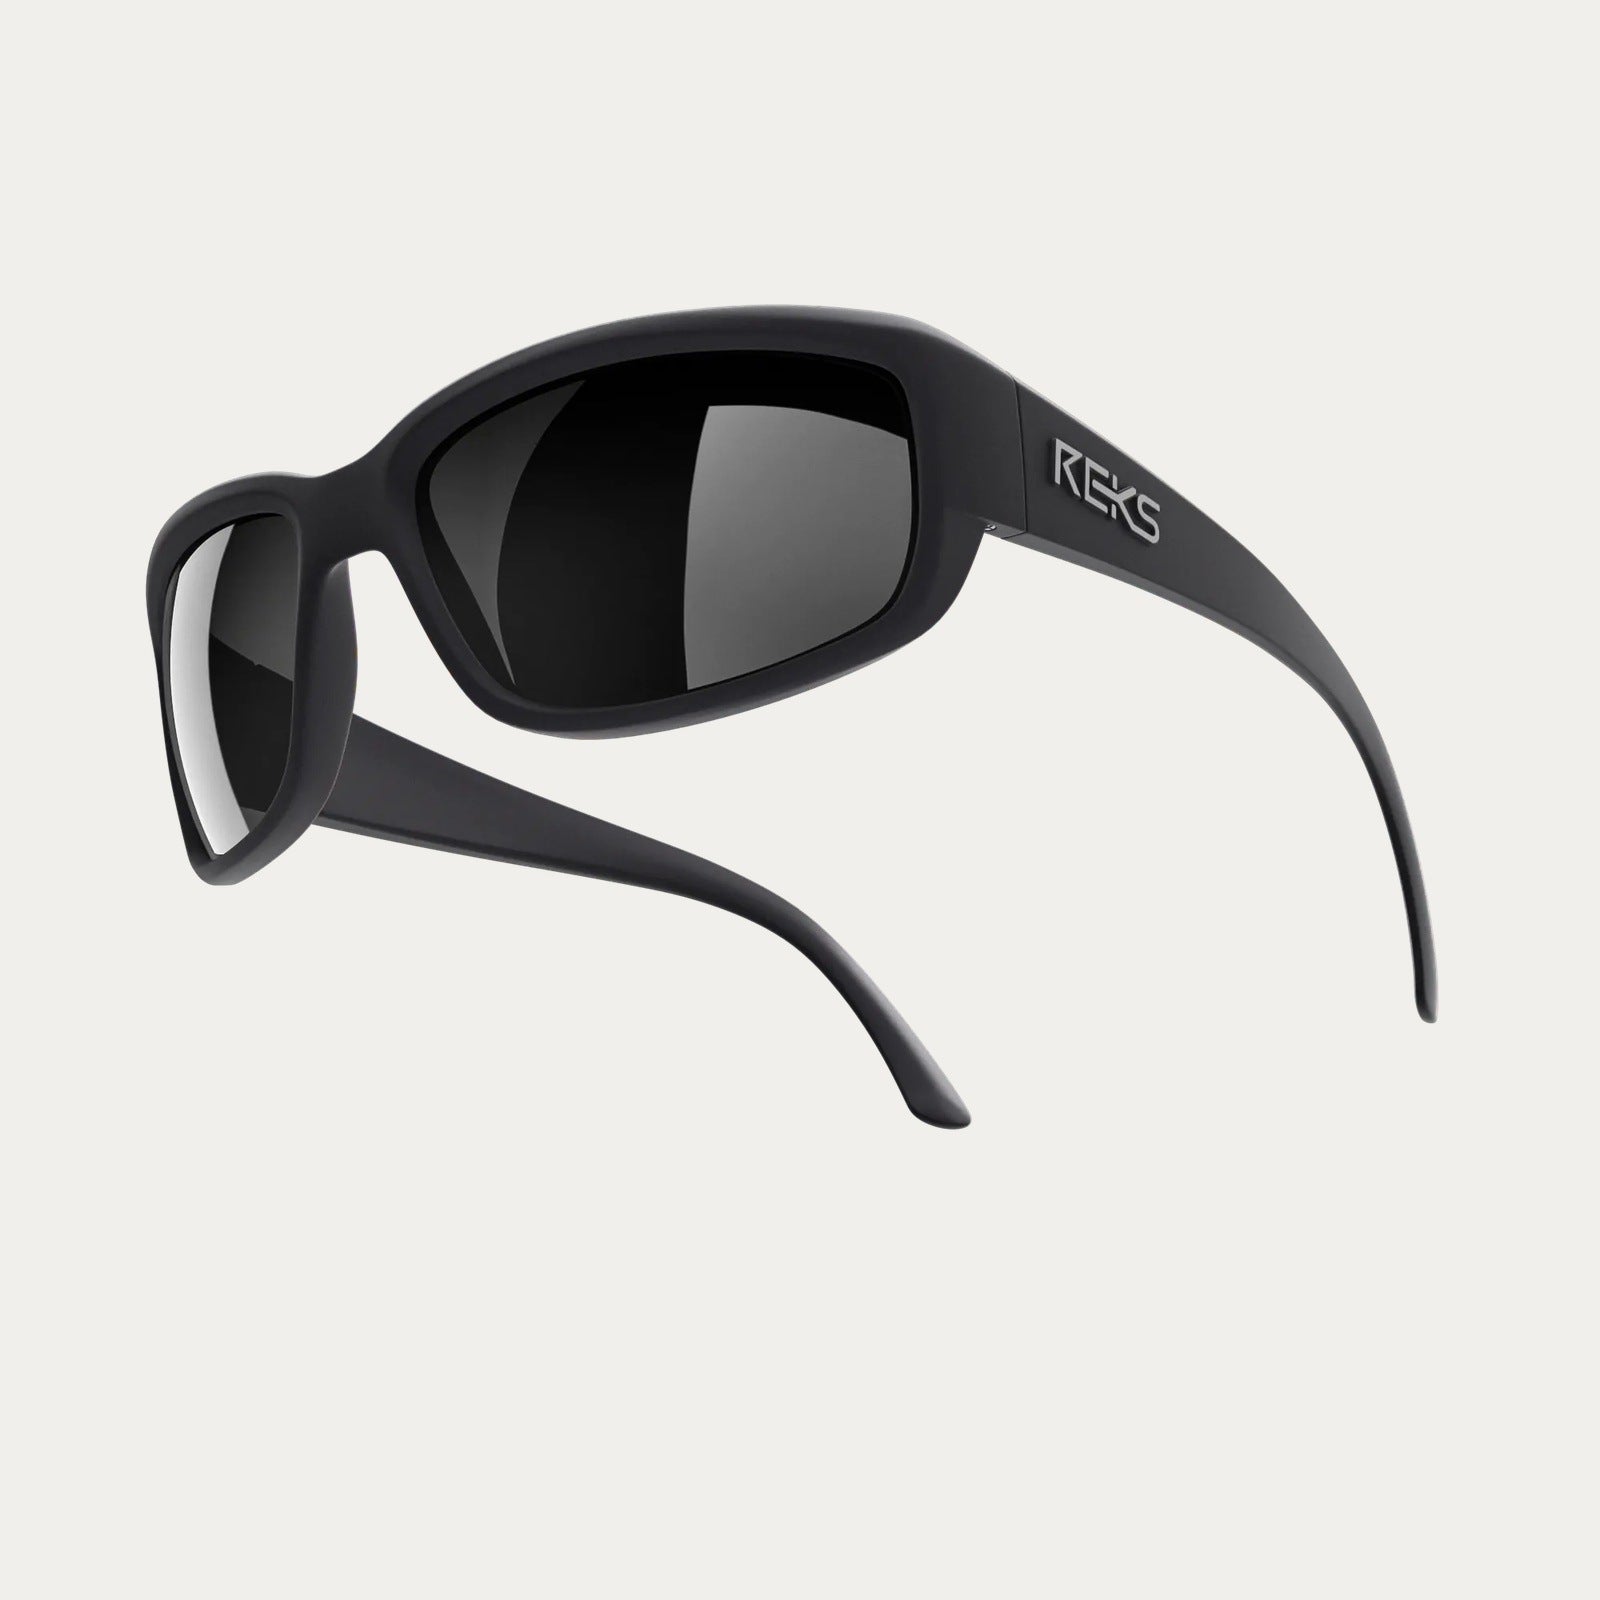 Reks | Wrap Around Trivex Polarized Prescription Sunglasses Solid Smoke Black Mirror